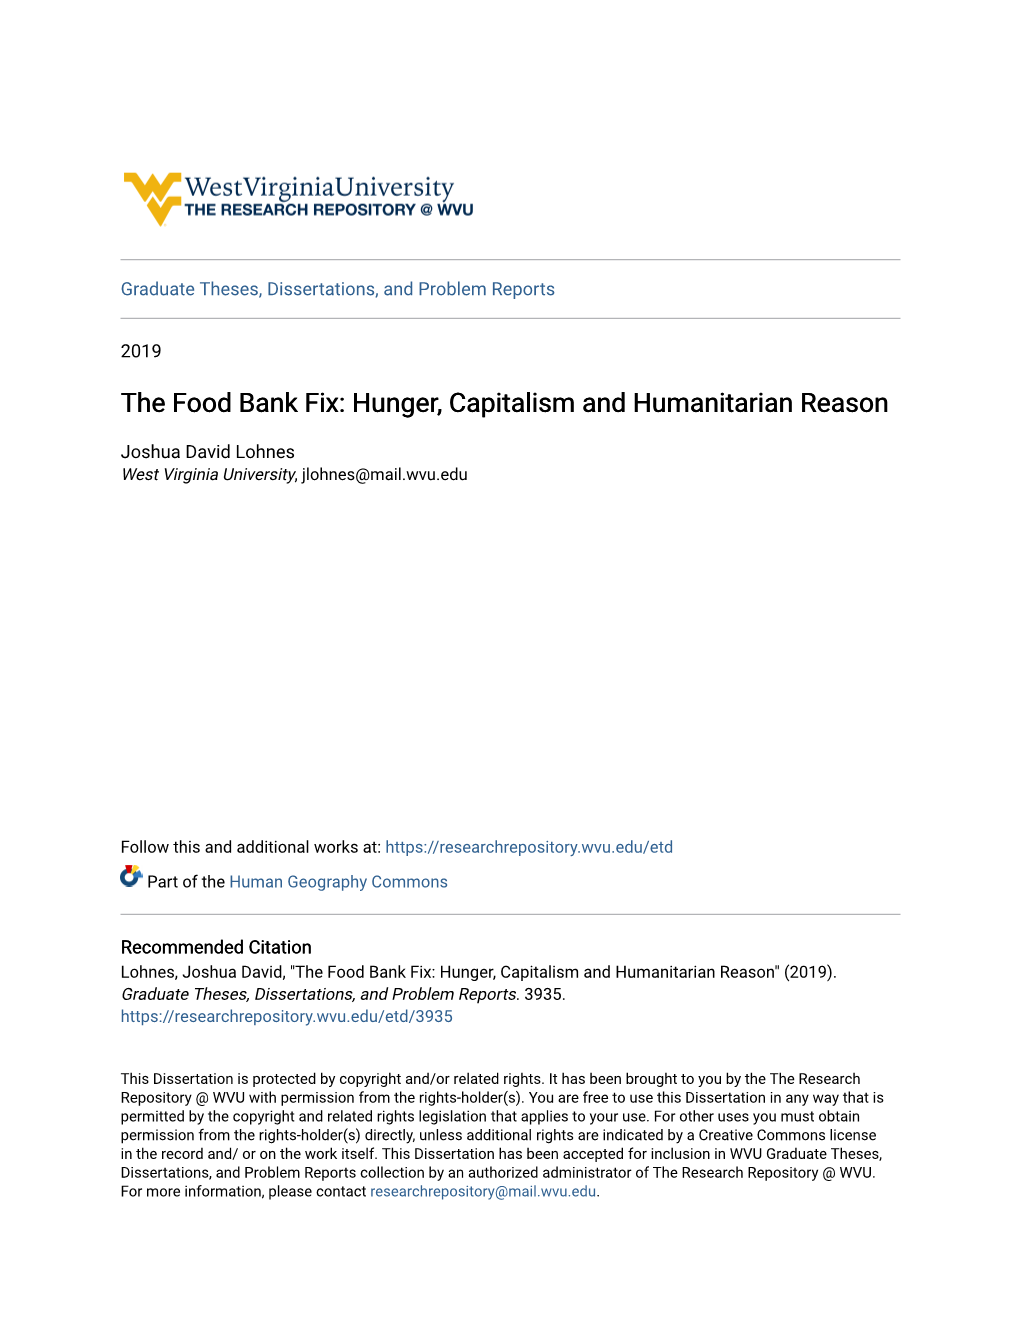 The Food Bank Fix: Hunger, Capitalism and Humanitarian Reason